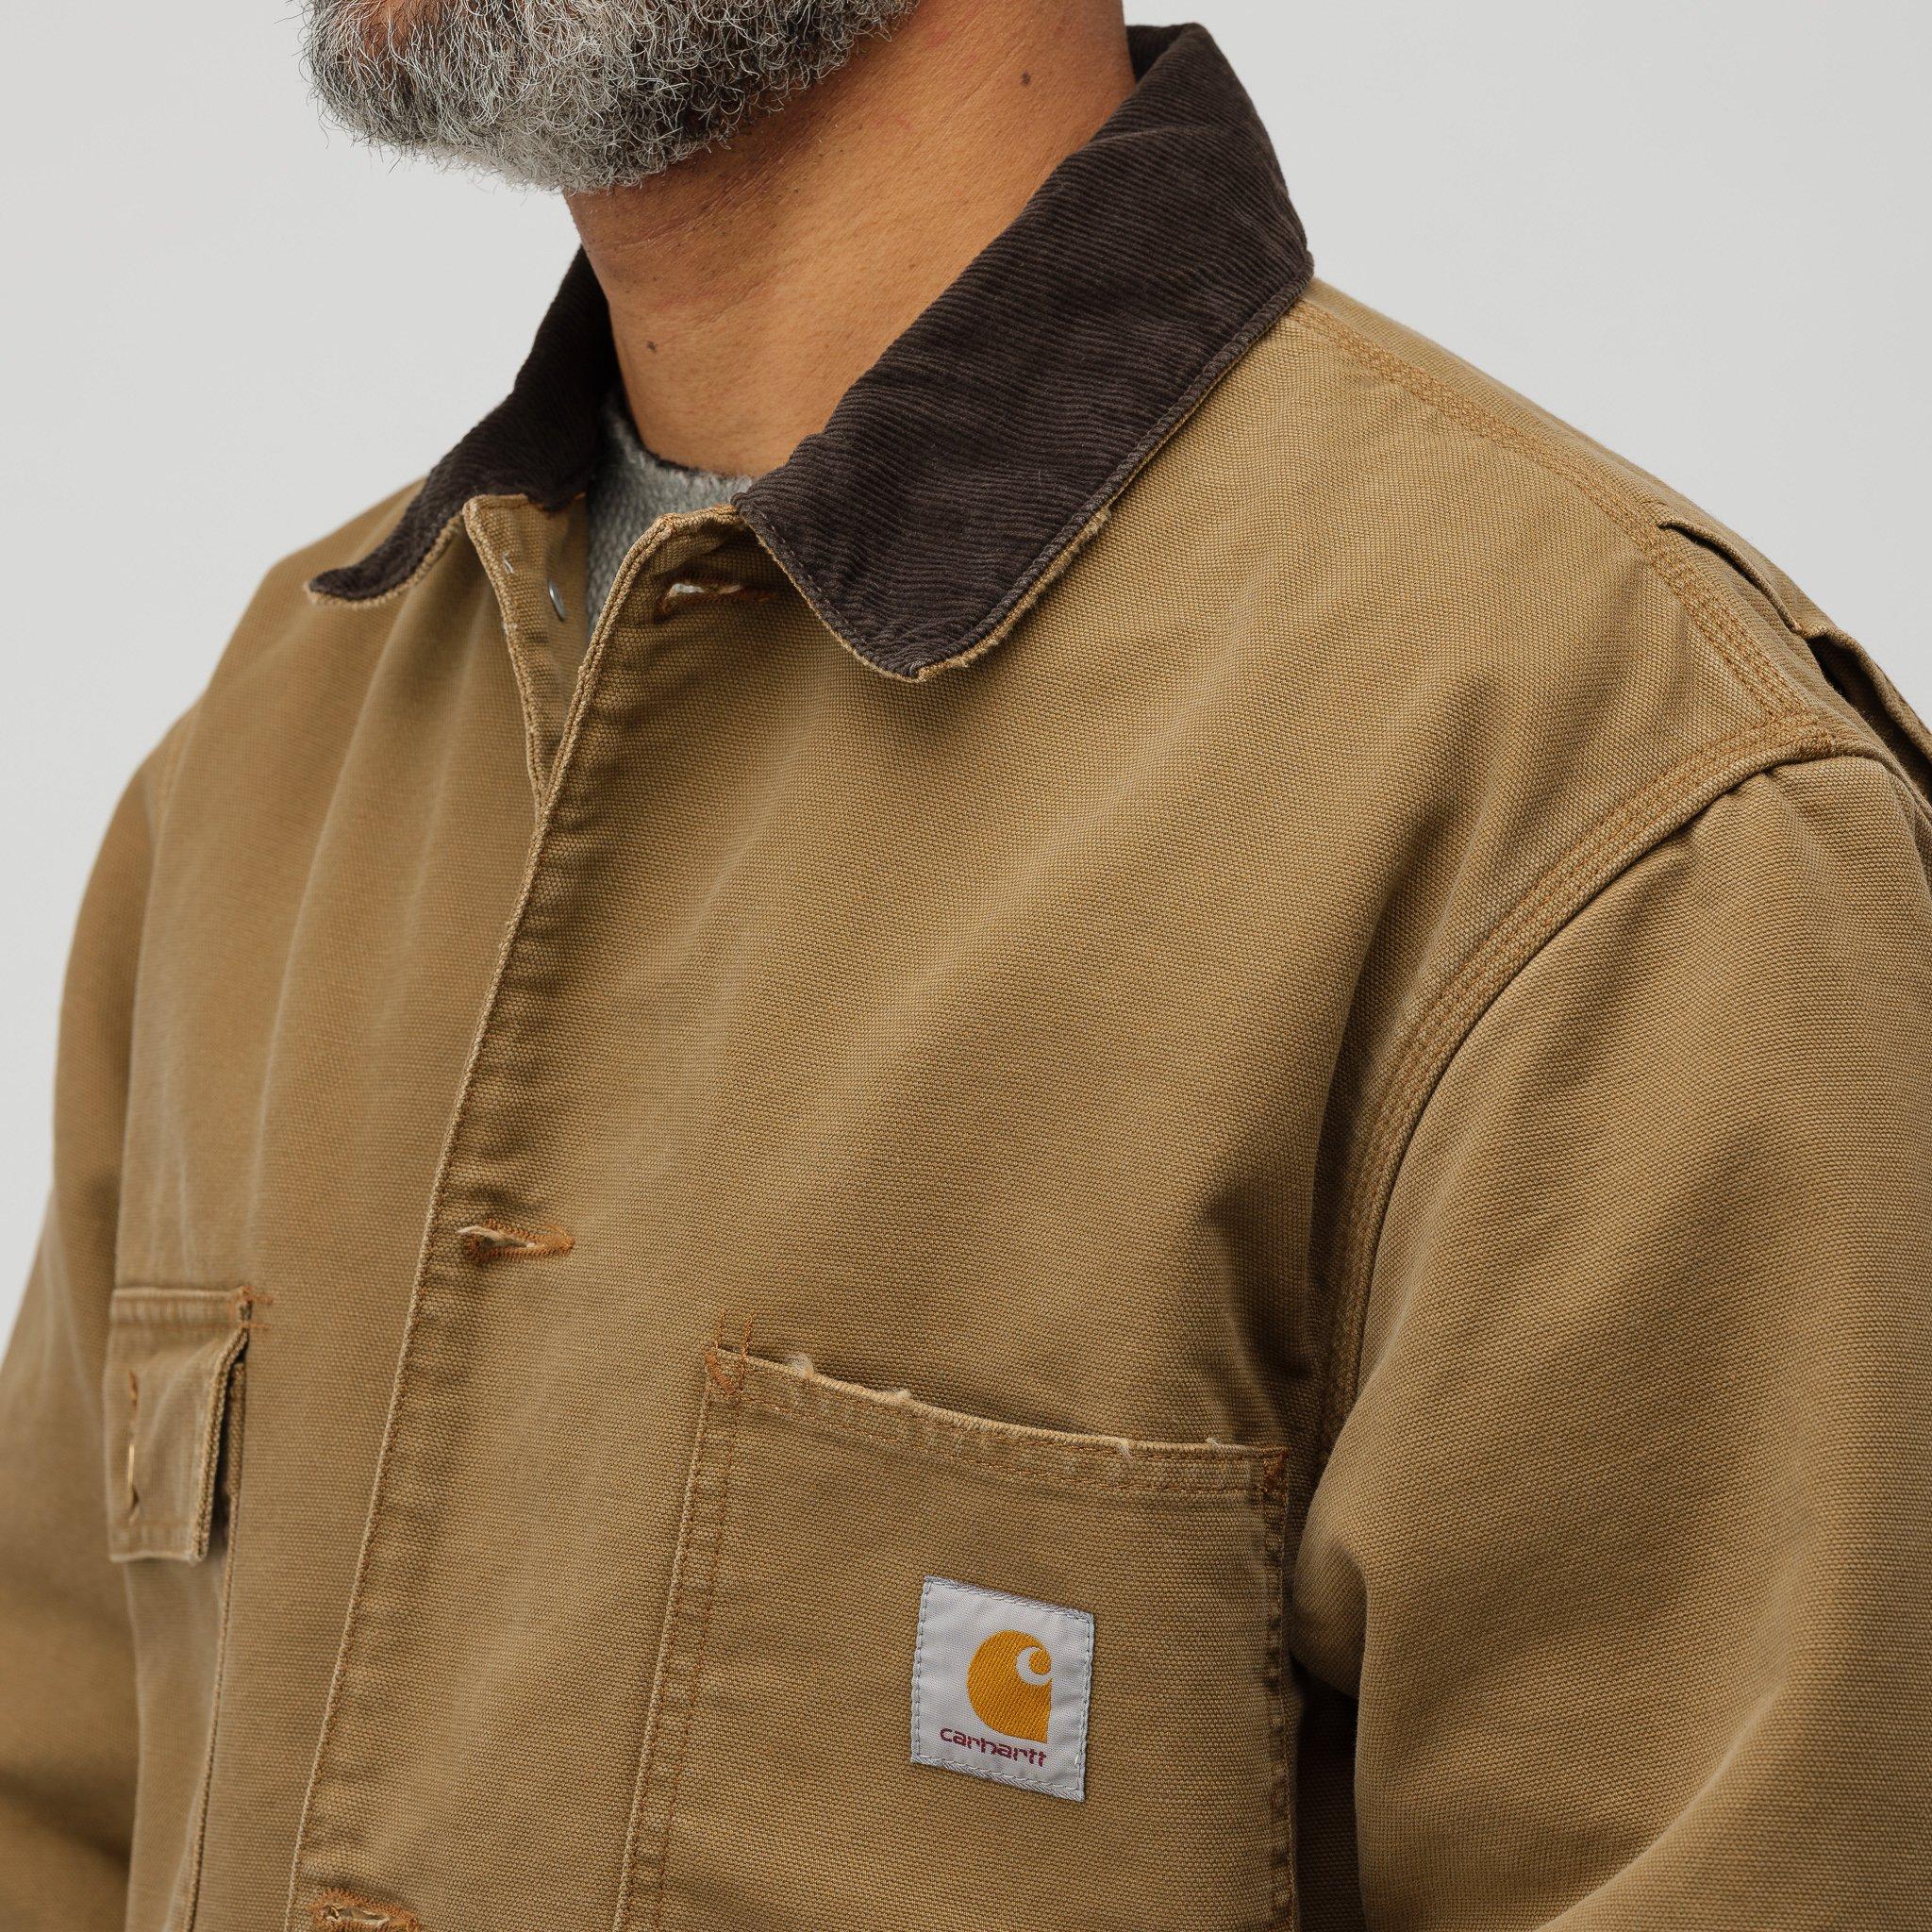 Carhartt WIP Cotton Og Chore Coat in Brown for Men - Lyst